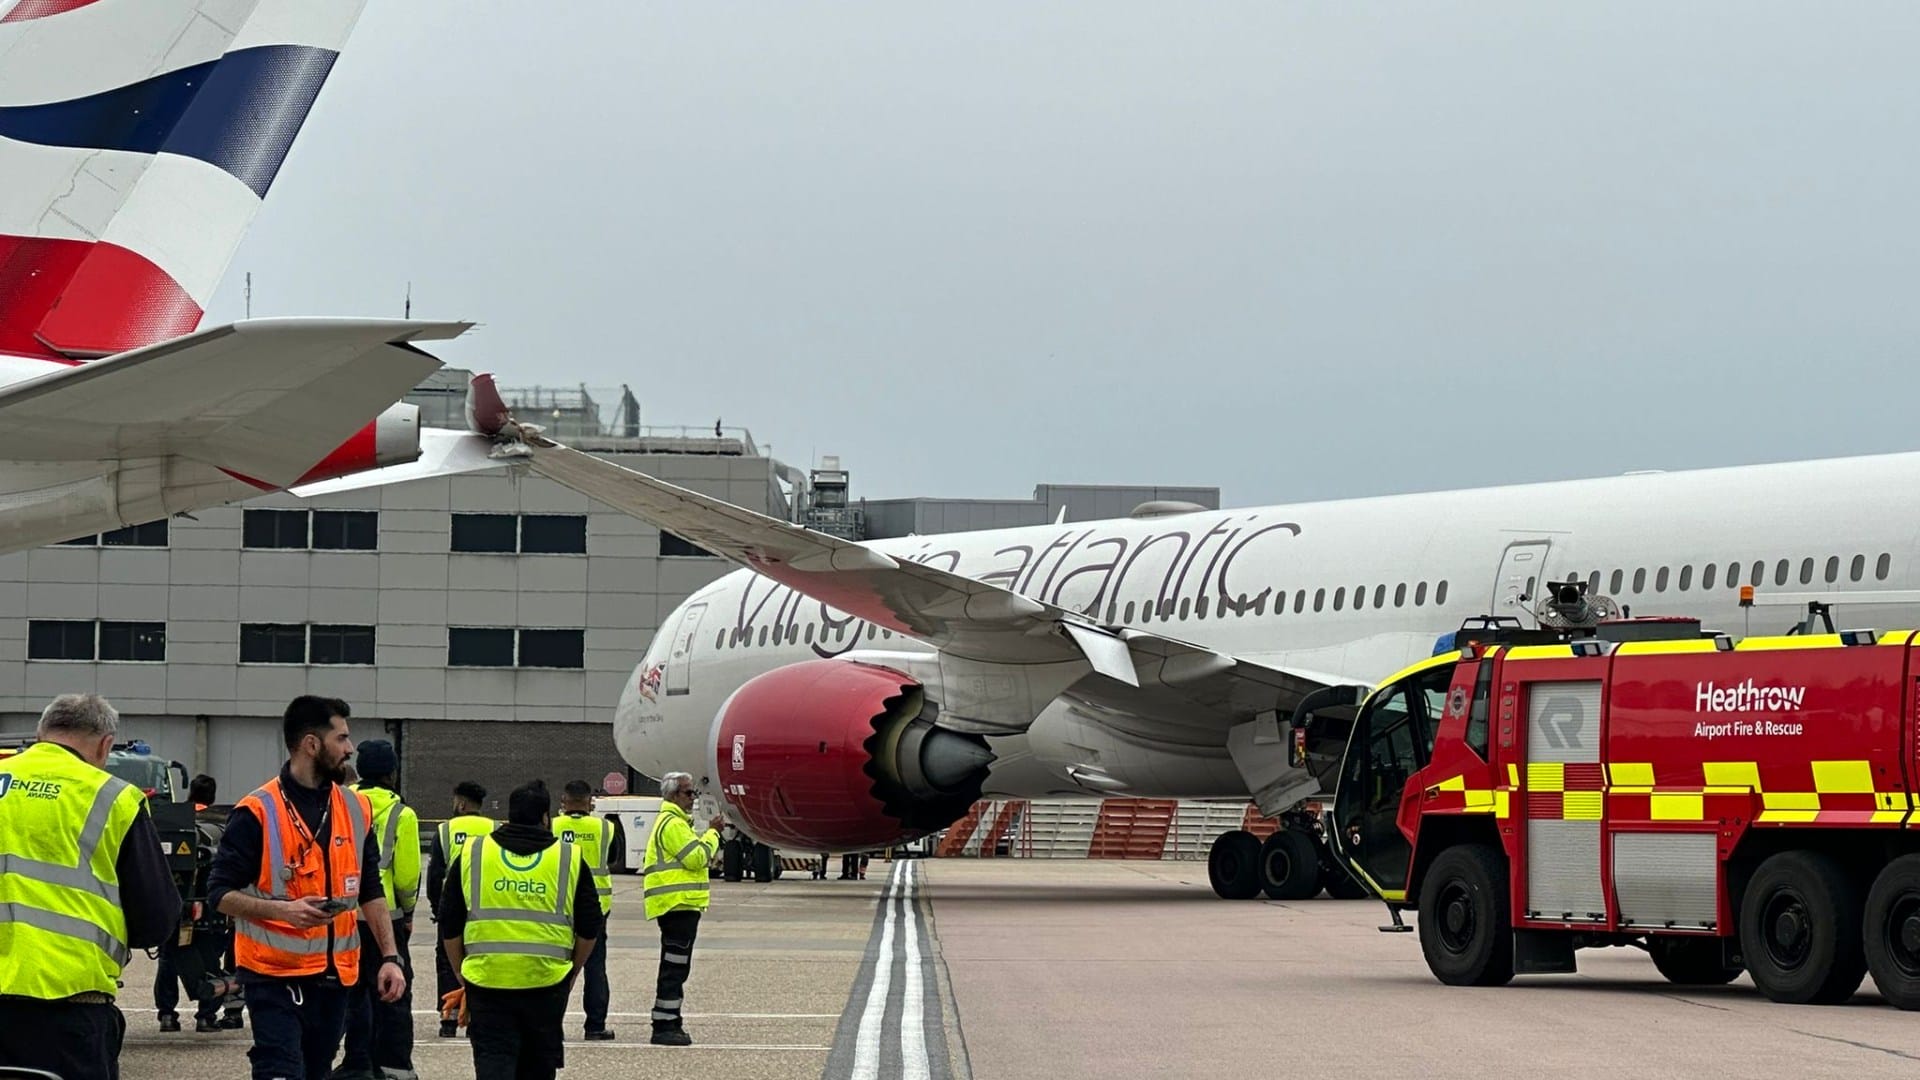 Two passenger planes crash on Heathrow tarmac sparking massive emergency response